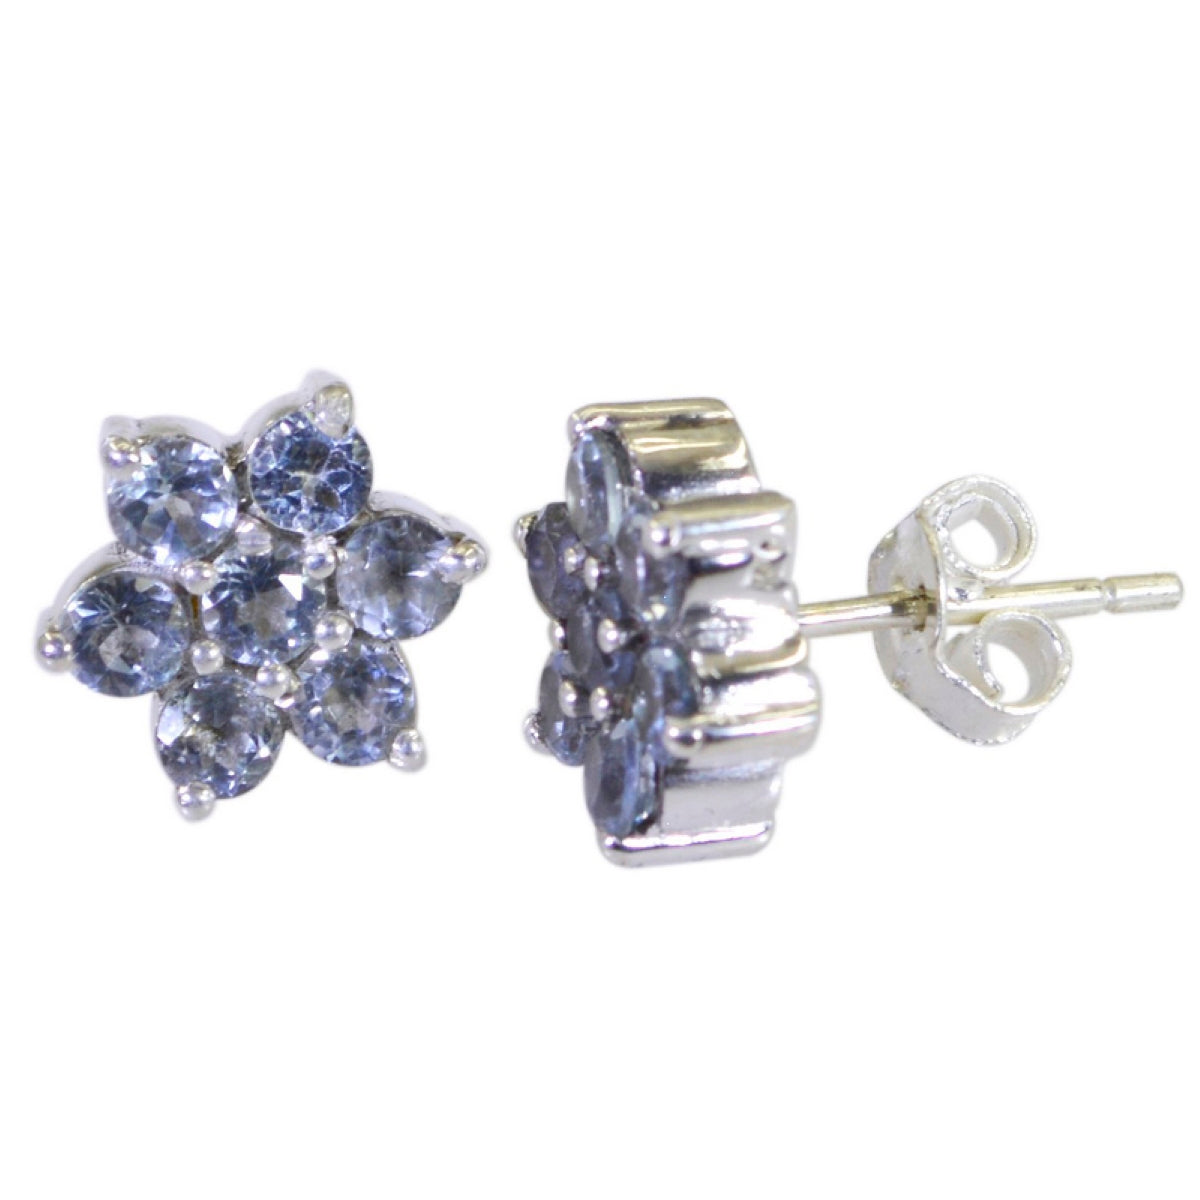 Riyo Good Gemstones round Faceted Blue Topaz Silver Earrings gift for girlfriend